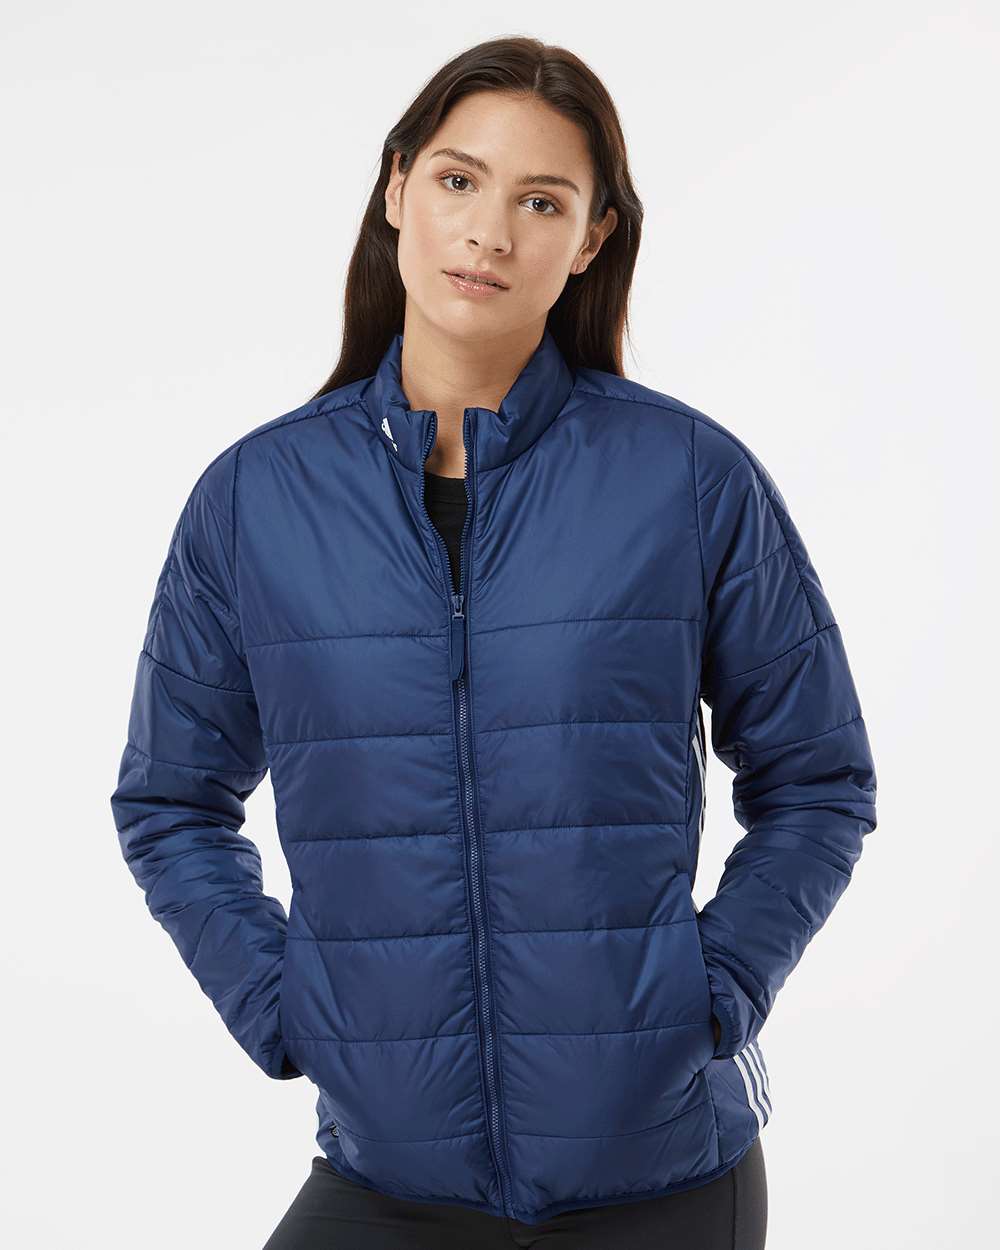 Adidas A571 Women's Puffer Jacket #colormdl_Team Navy Blue